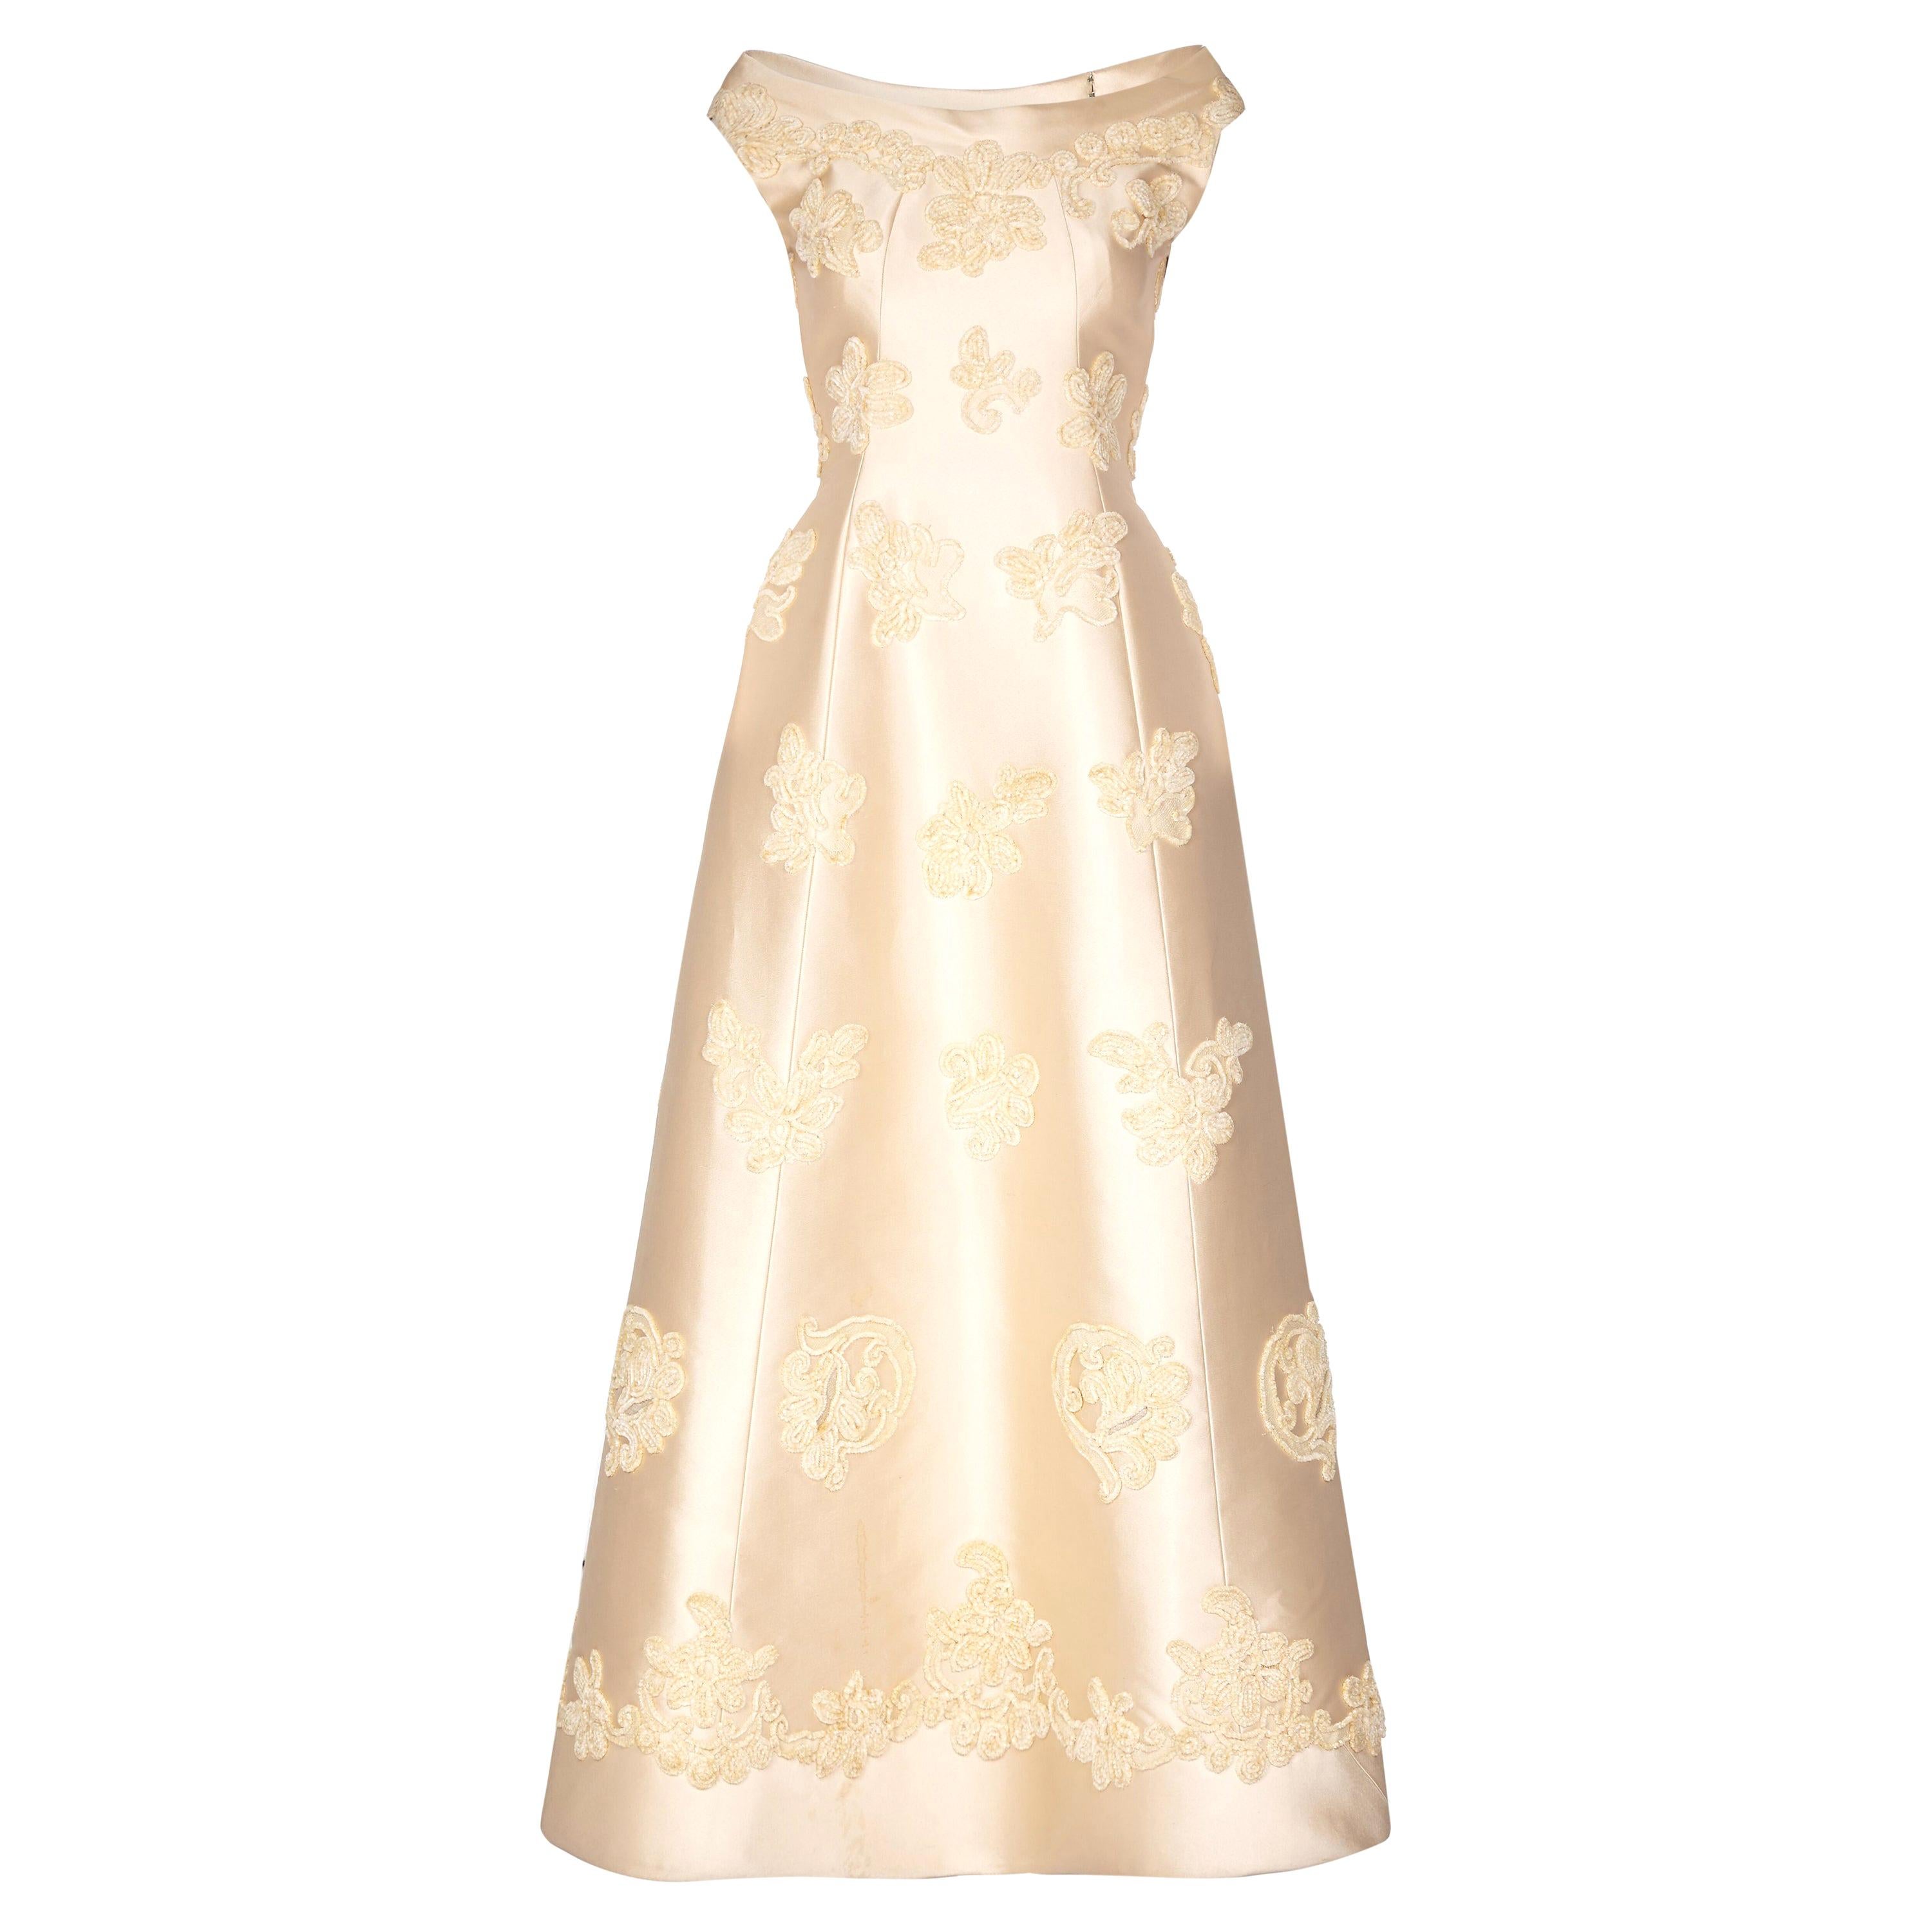 Pierre Balmain 1960s Haute Couture Ivory Silk Gazar Bridal Dress